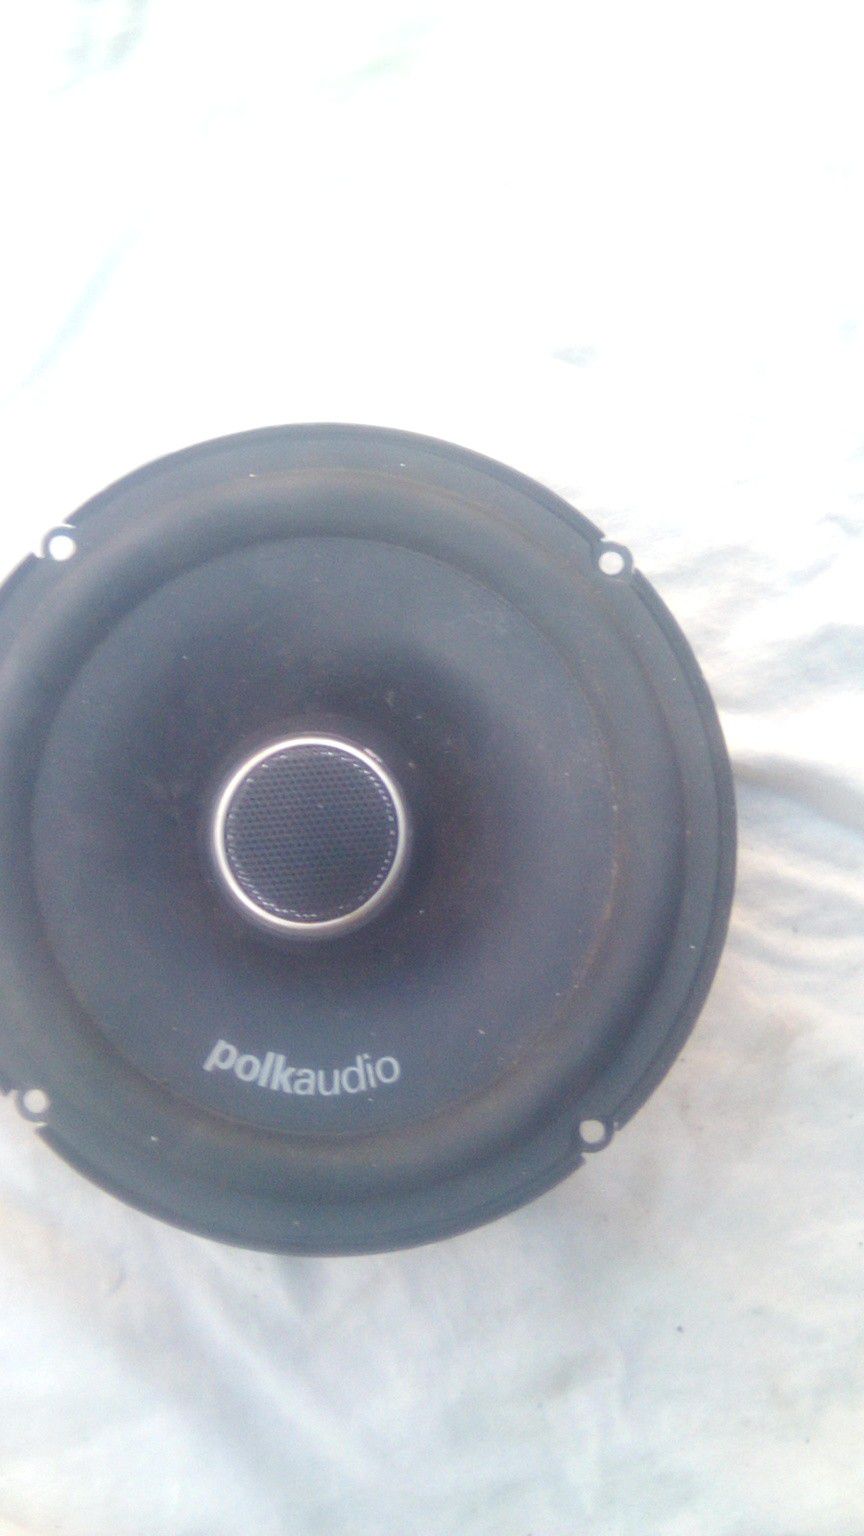 Polk Audio car speakers $30